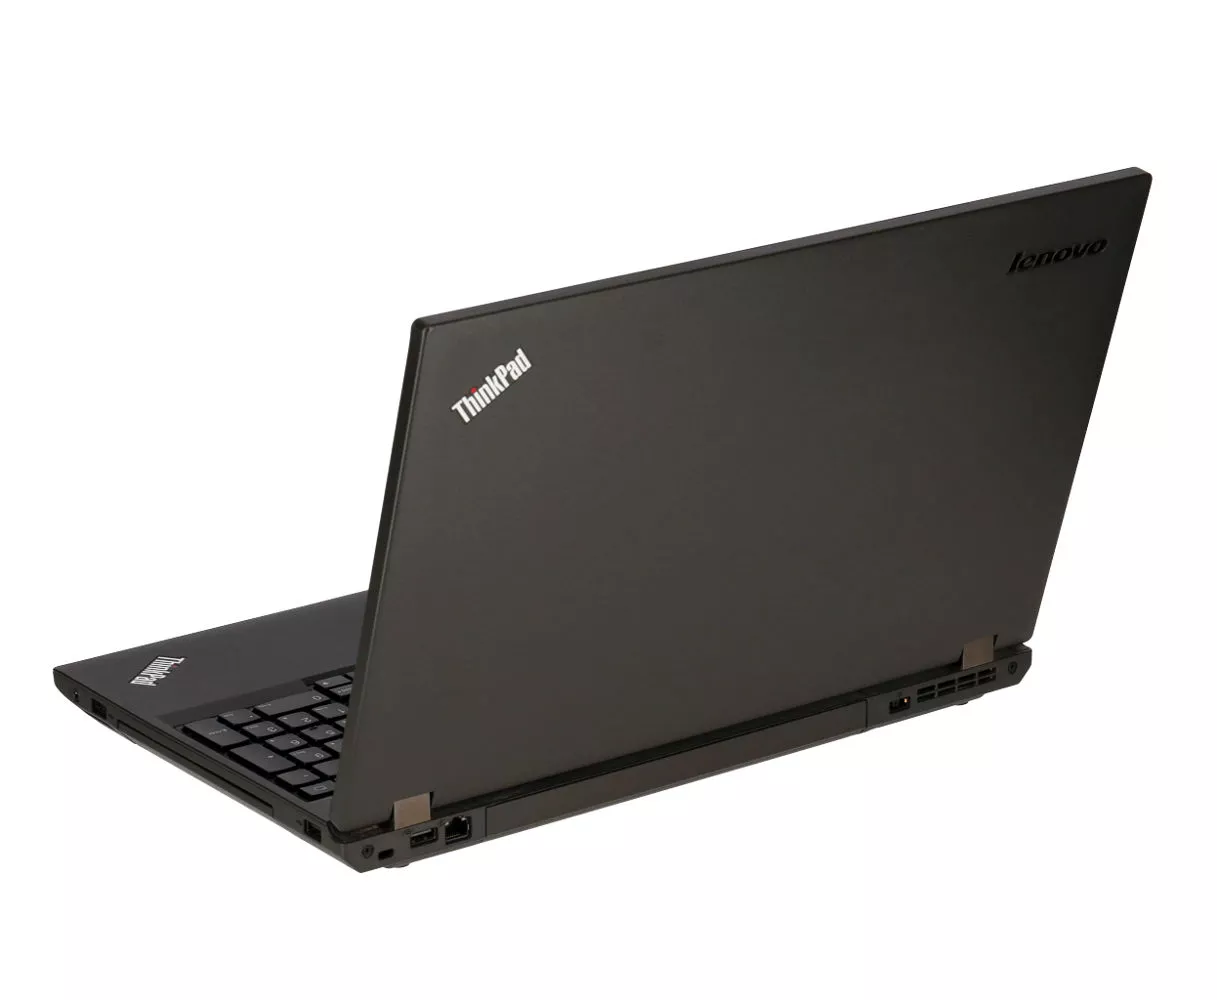 Lenovo ThinkPad L540 Core i5 4300M 2,6 GHz Webcam B-Ware